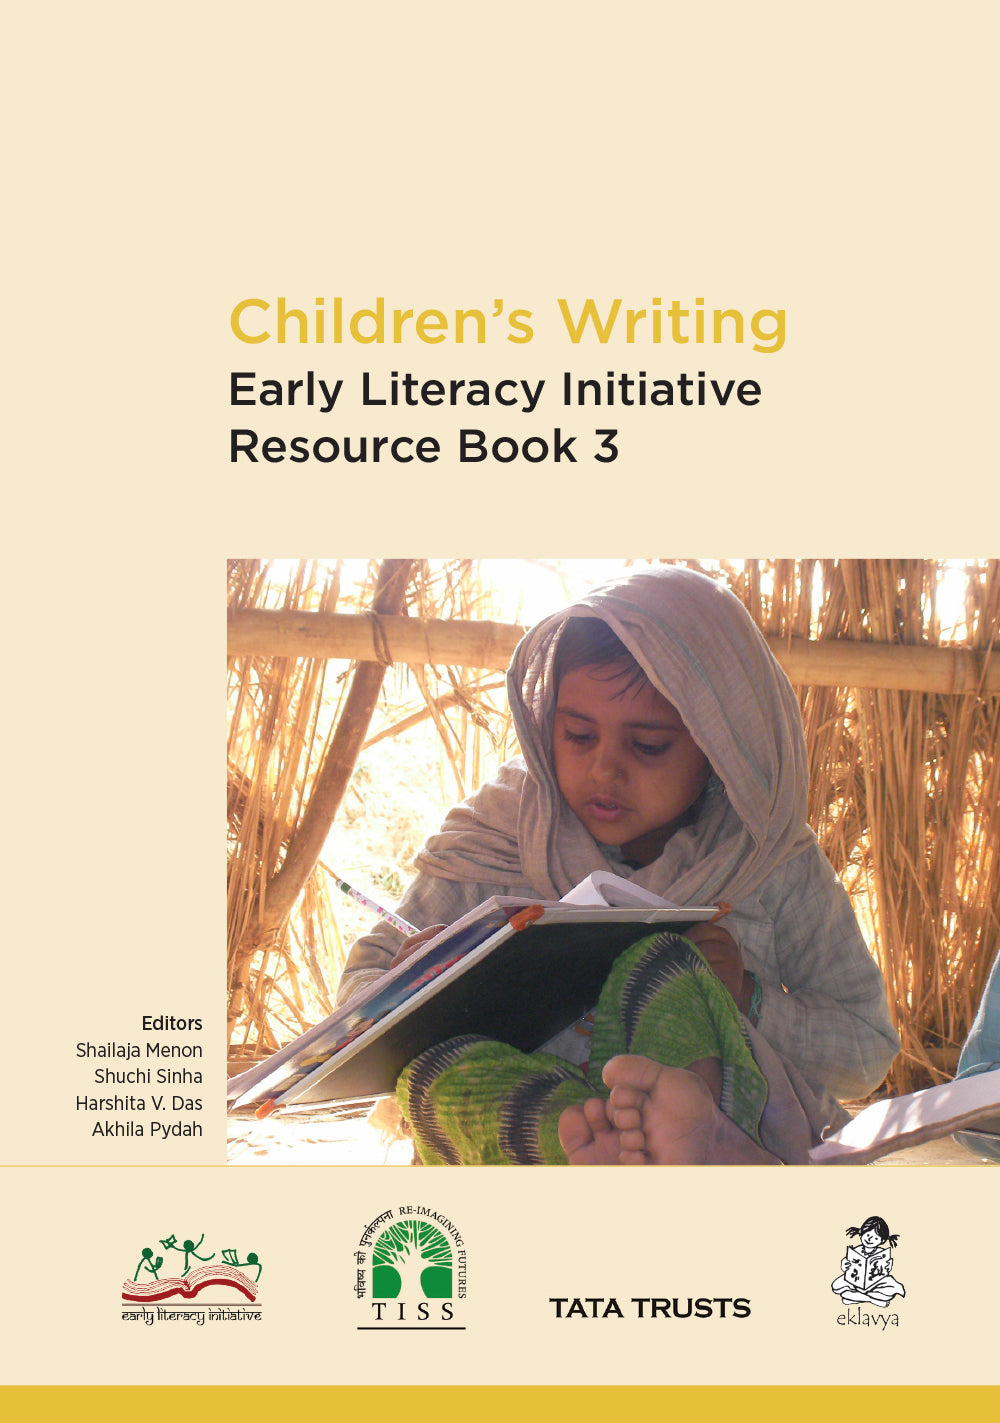 Childrenâ€™s Writing Resource Book 3 (ELI Series)